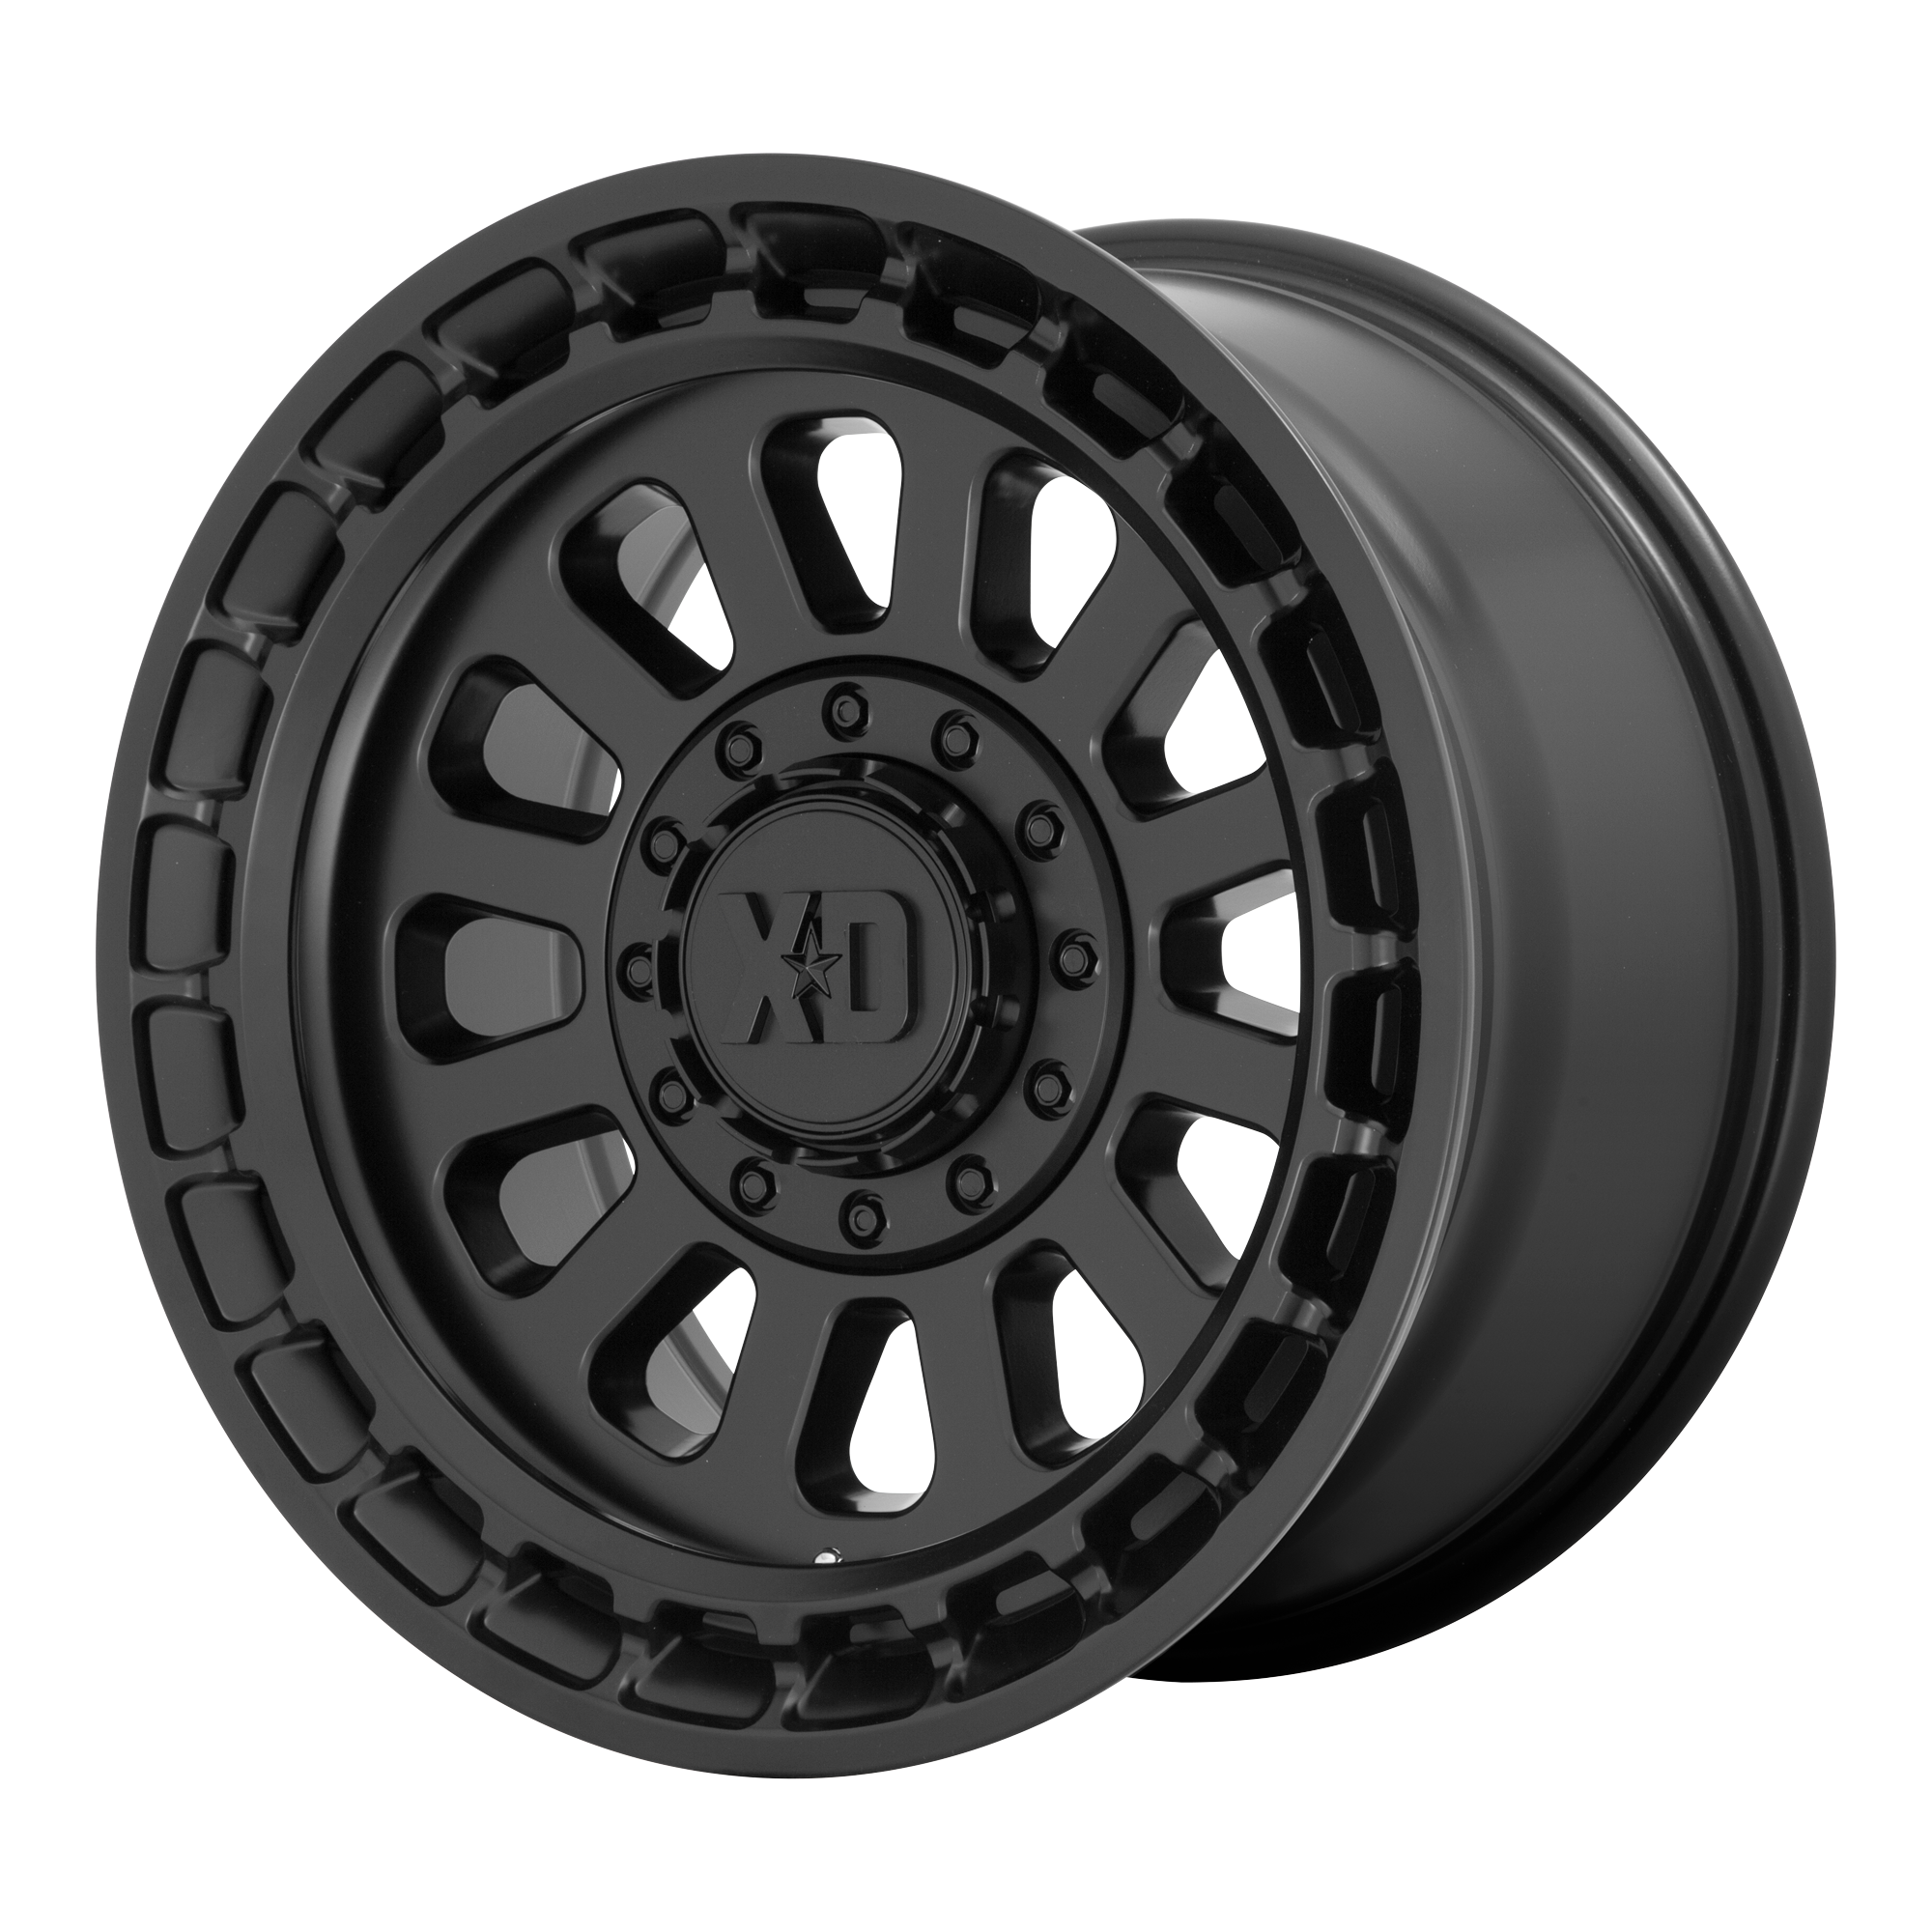 XD 20"x10" Non-Chrome Satin Black Custom Wheel ARSWCWXD85621080718N